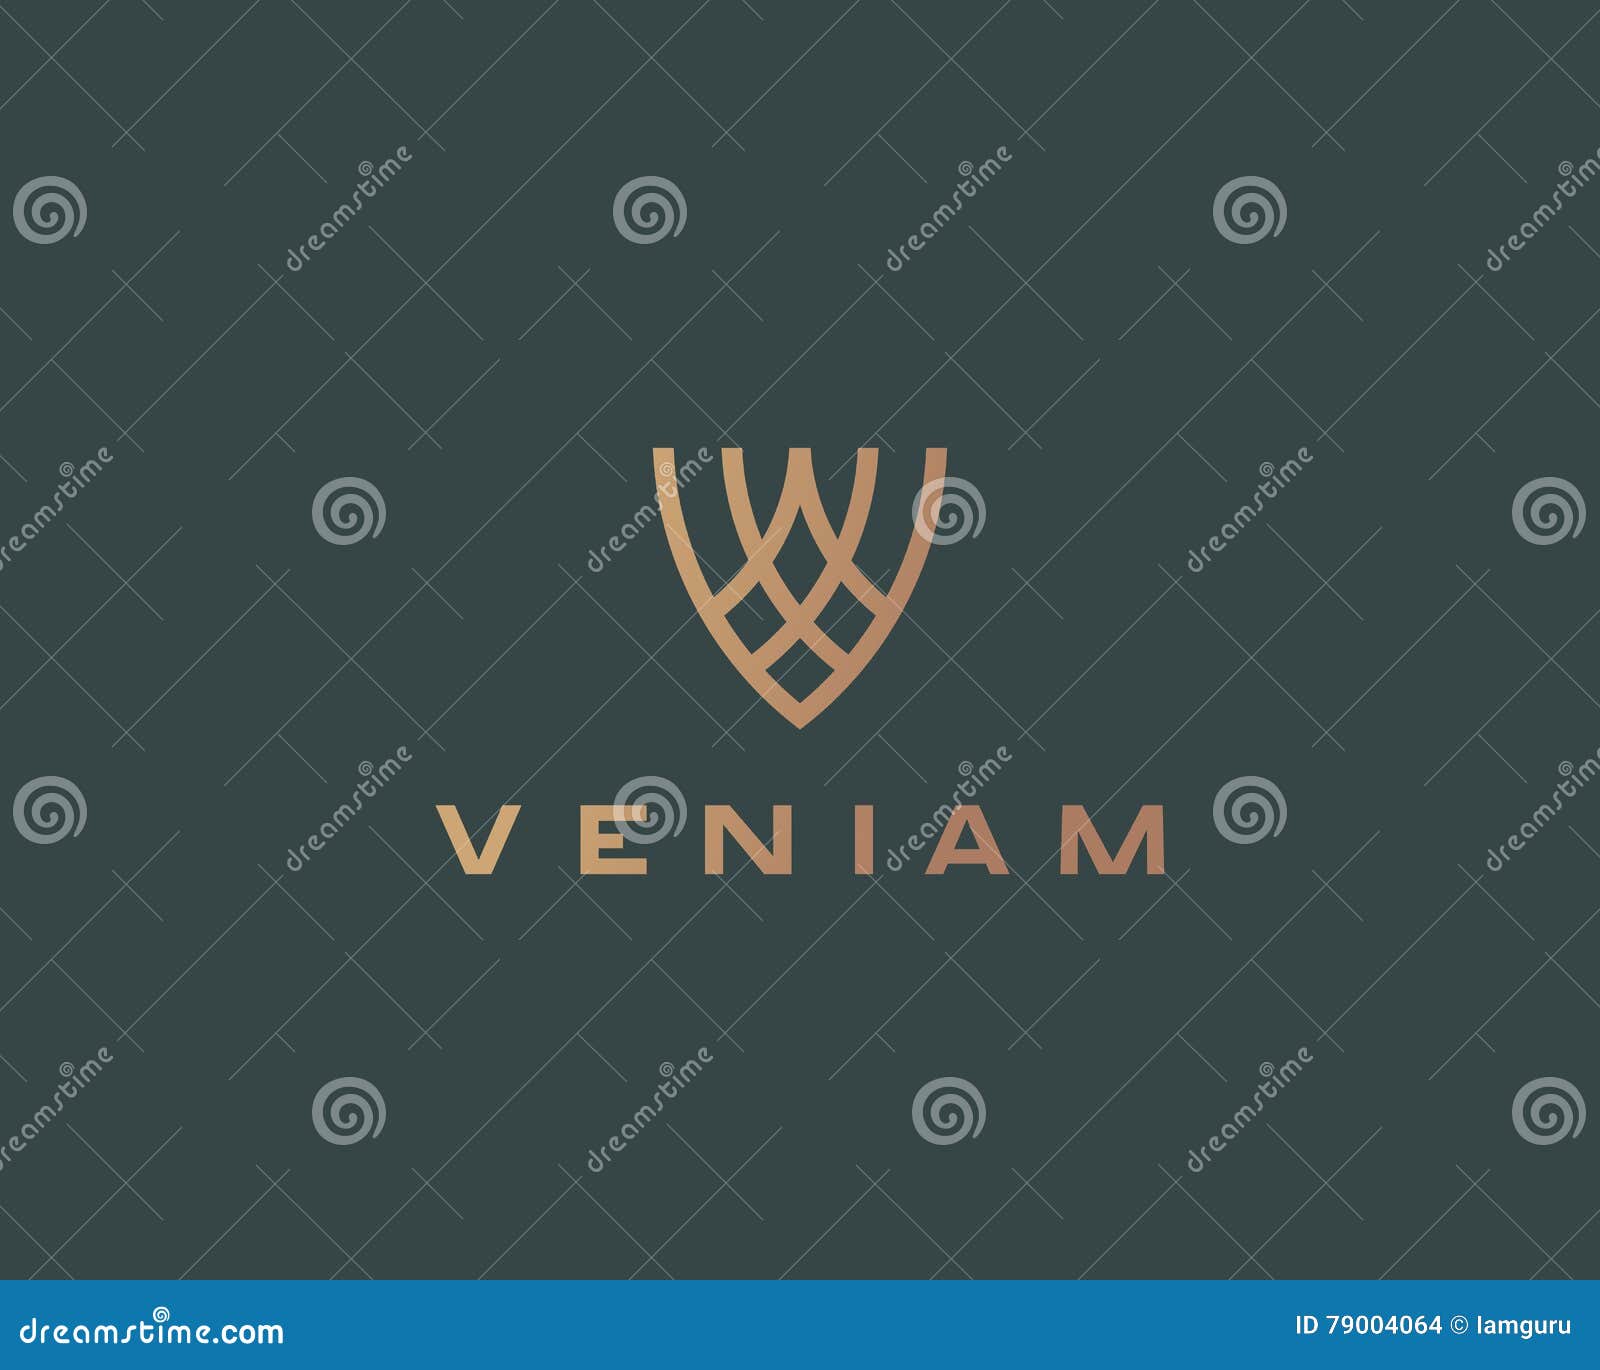 Premium Vector  Lv monogram logo design letter text name symbol